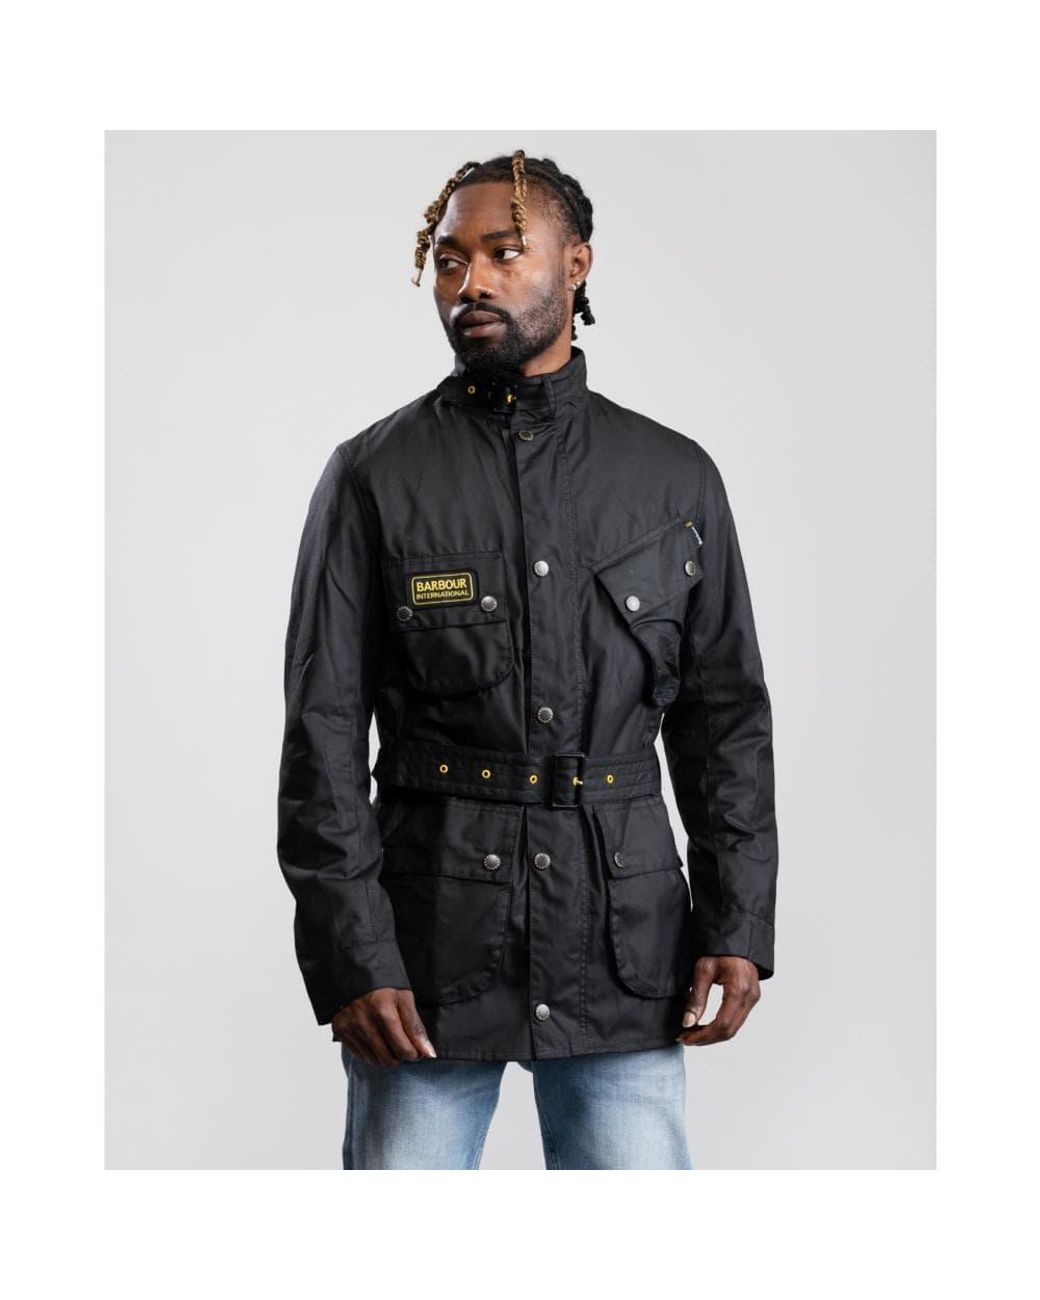 Barbour Cotton Slim International Wax Jacket in Black/Black (Black) for Men  - Save 50% - Lyst